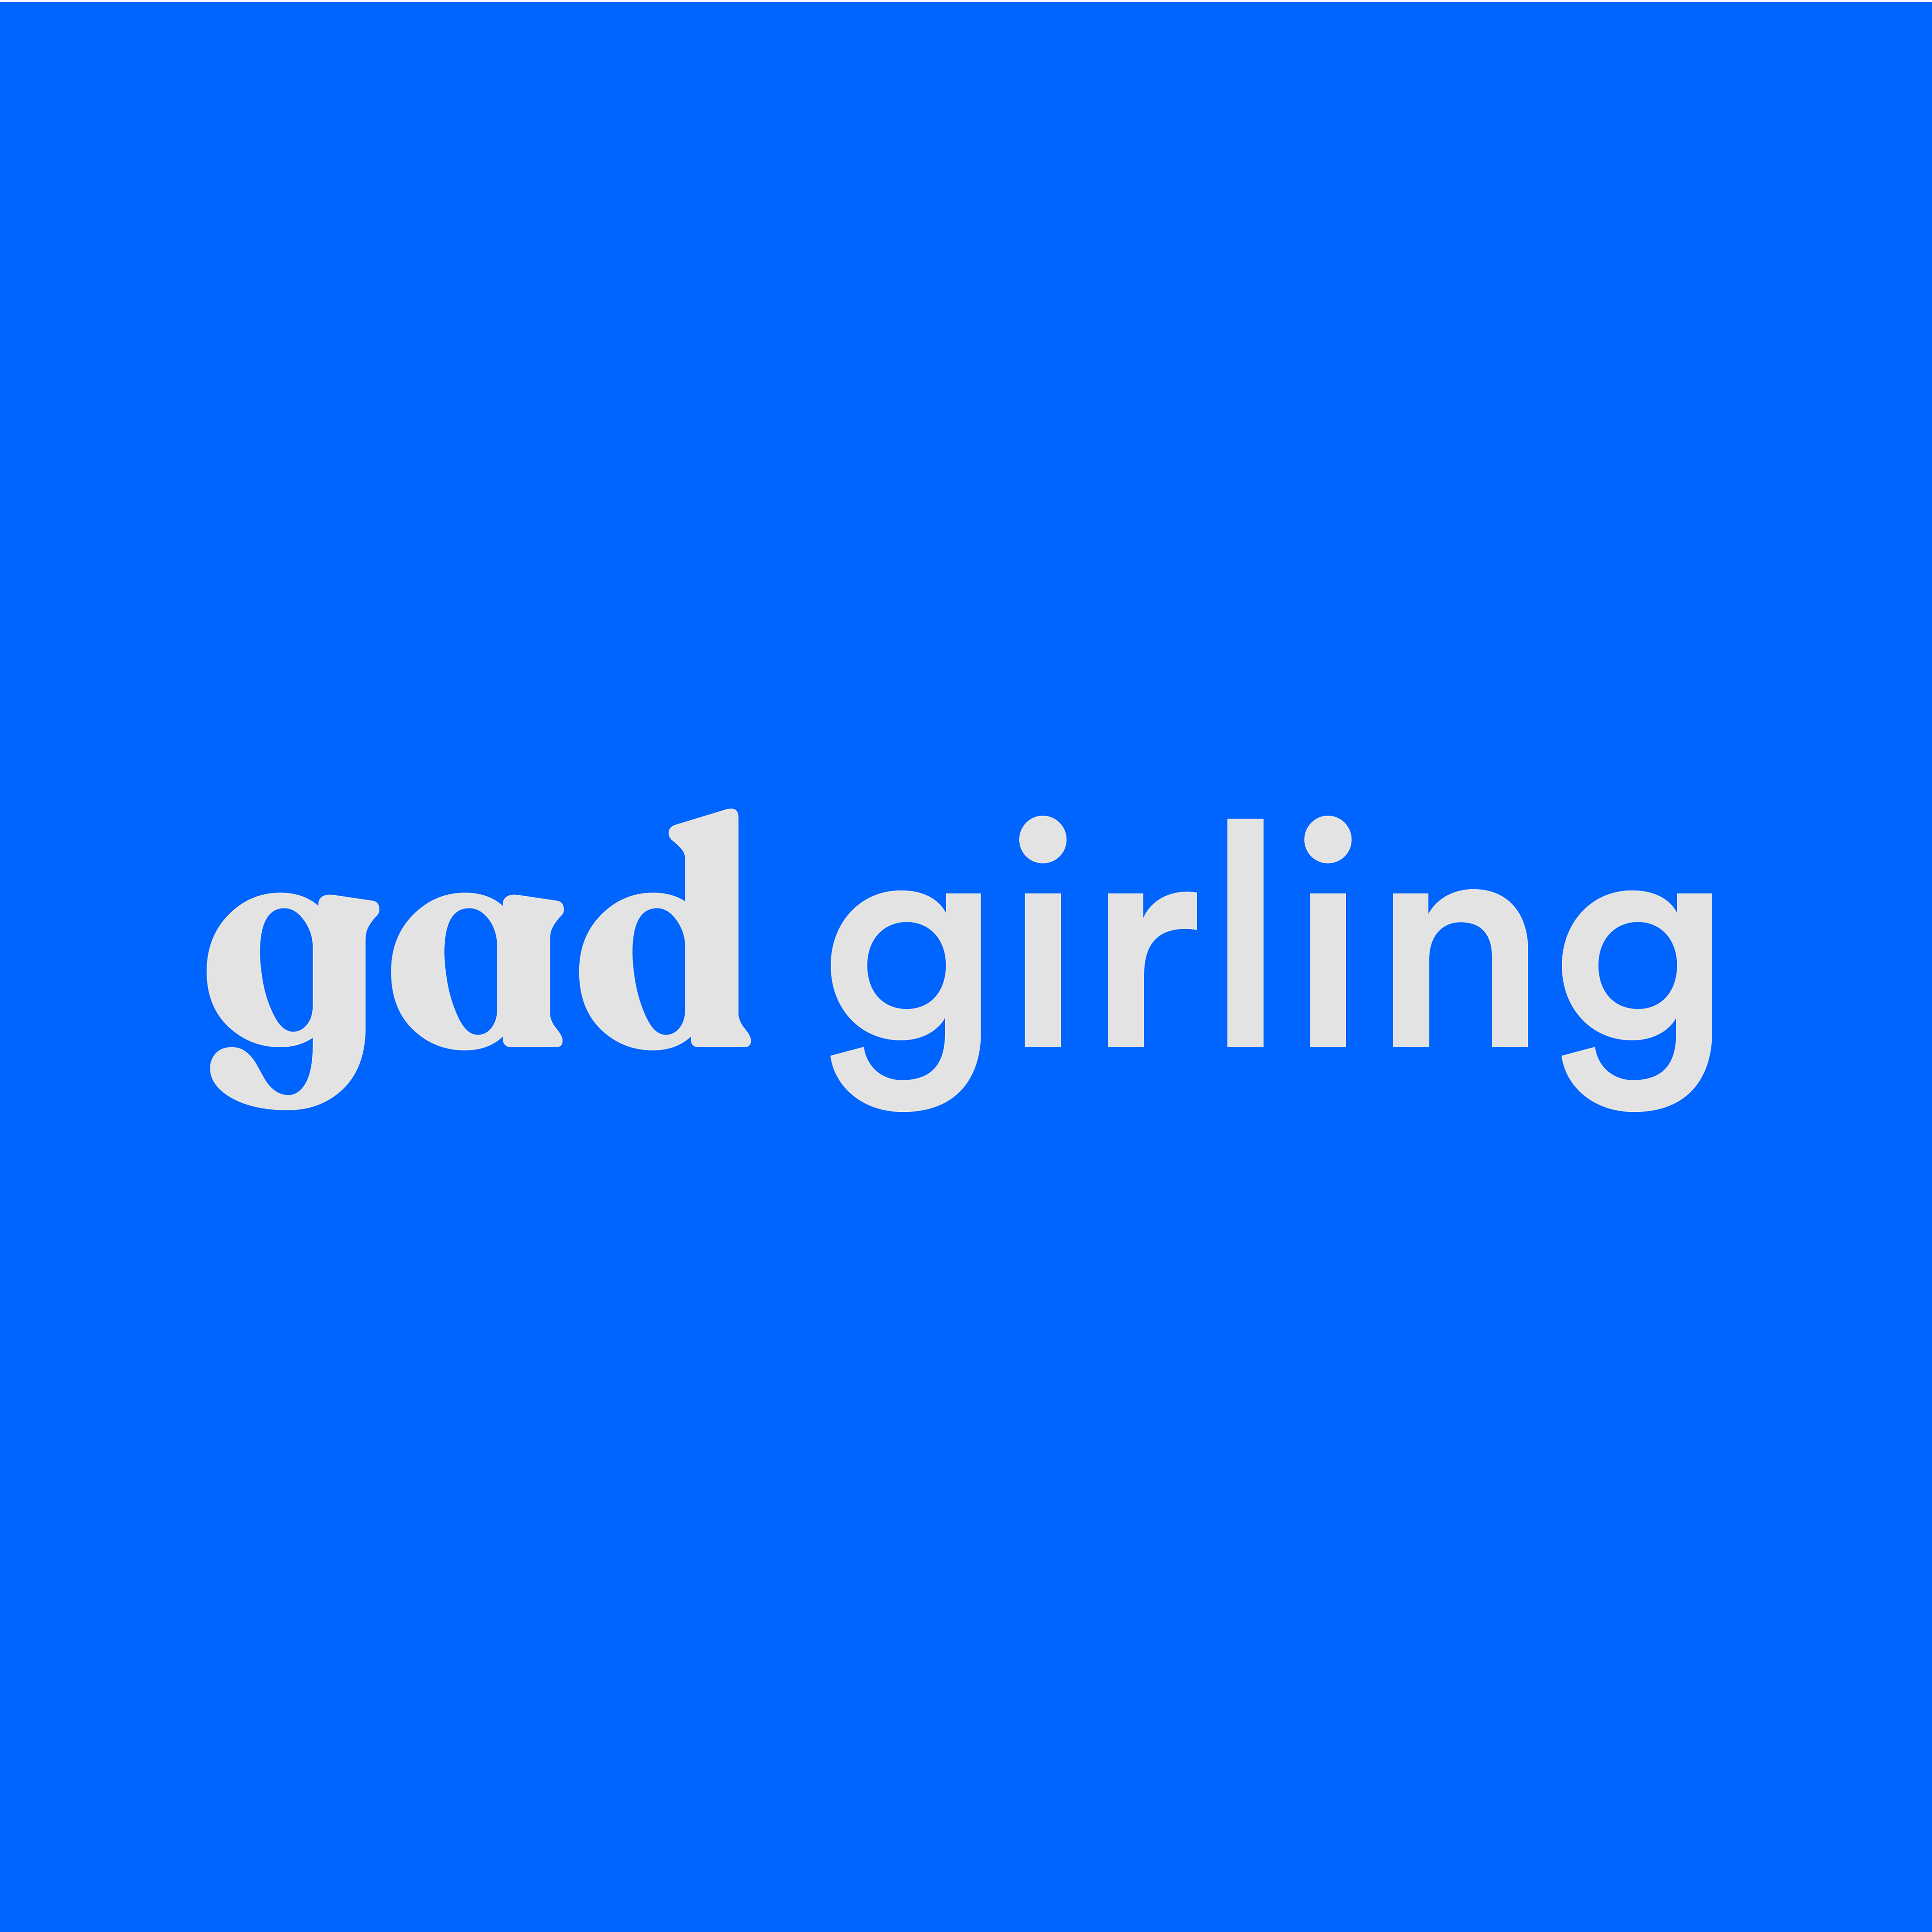 Gad Girling graphic design logo